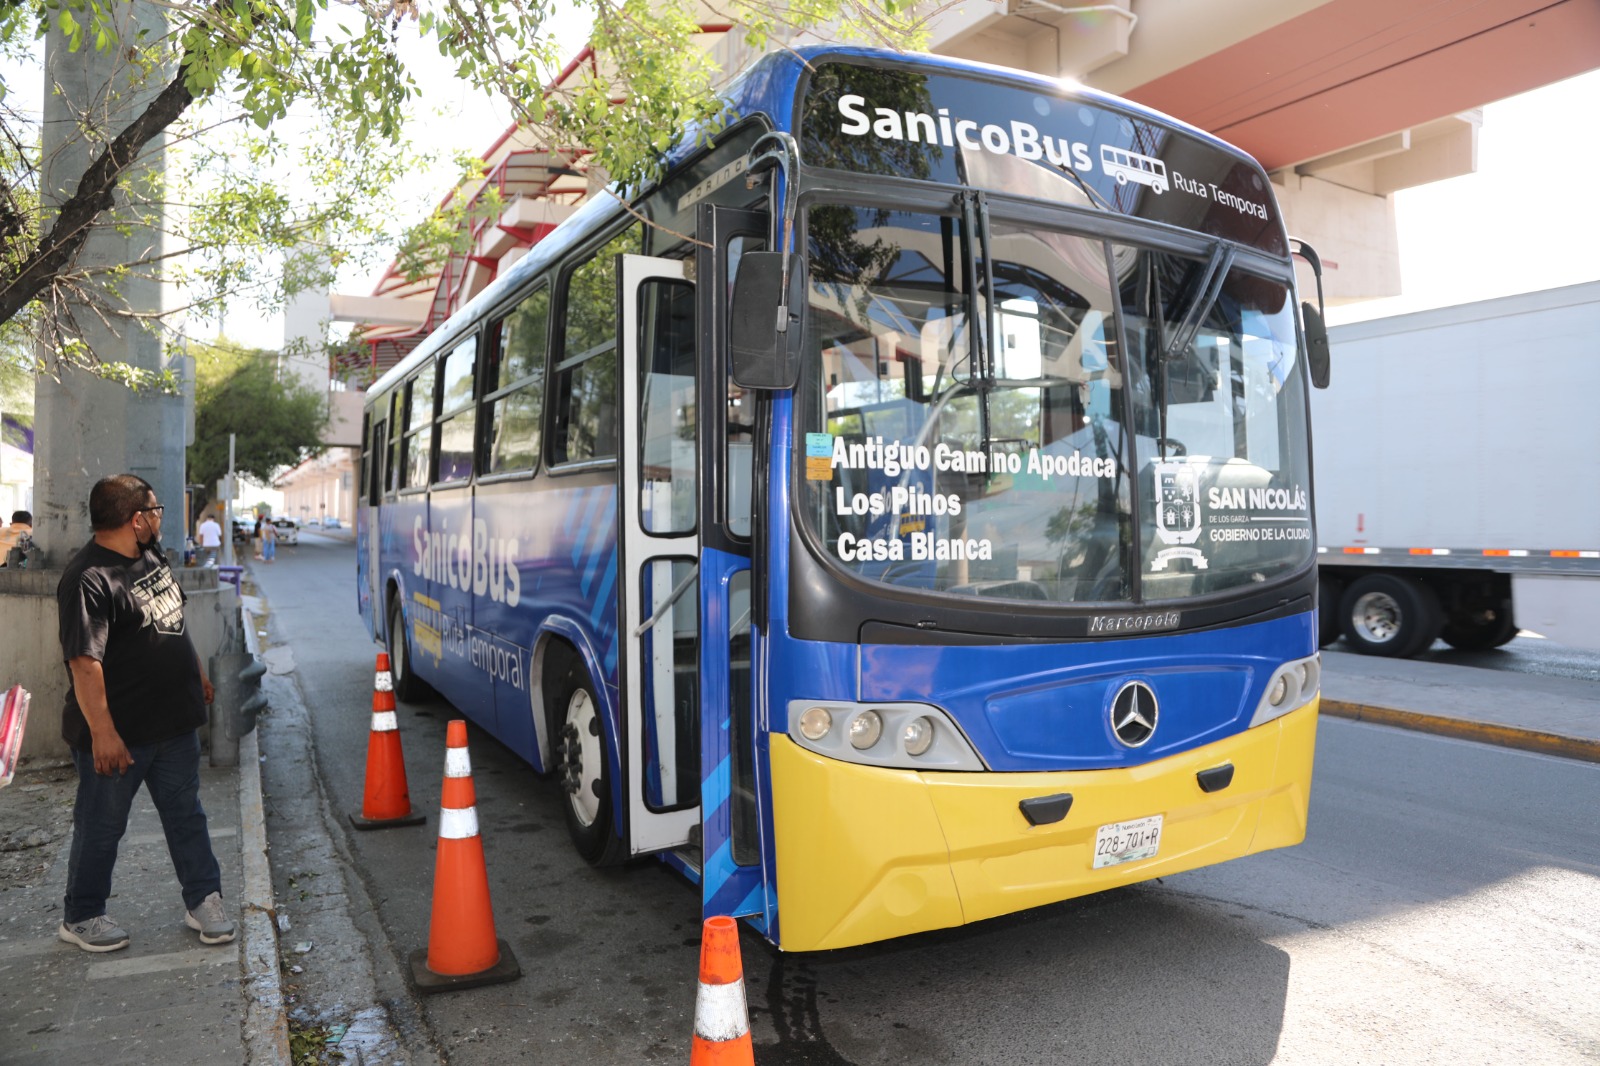 Reactivará San Nicolás ruta emergente “Sanicobus”